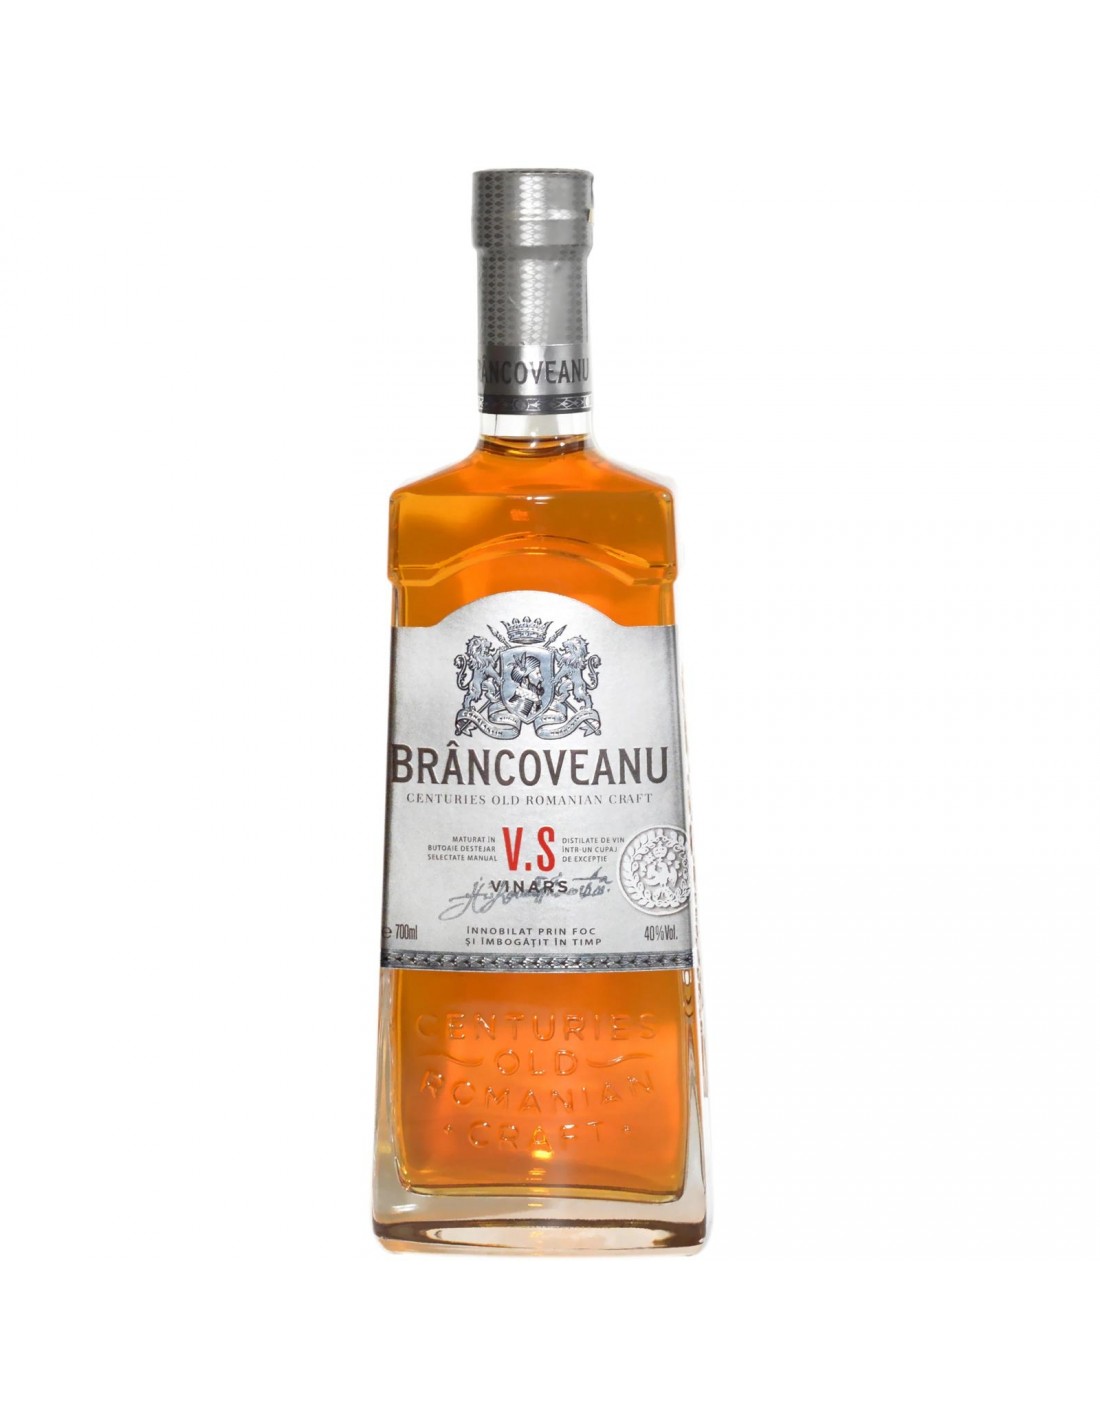 Brandy Brancoveanu VS, 40% alc., 0.7L, Romania alcooldiscount.ro